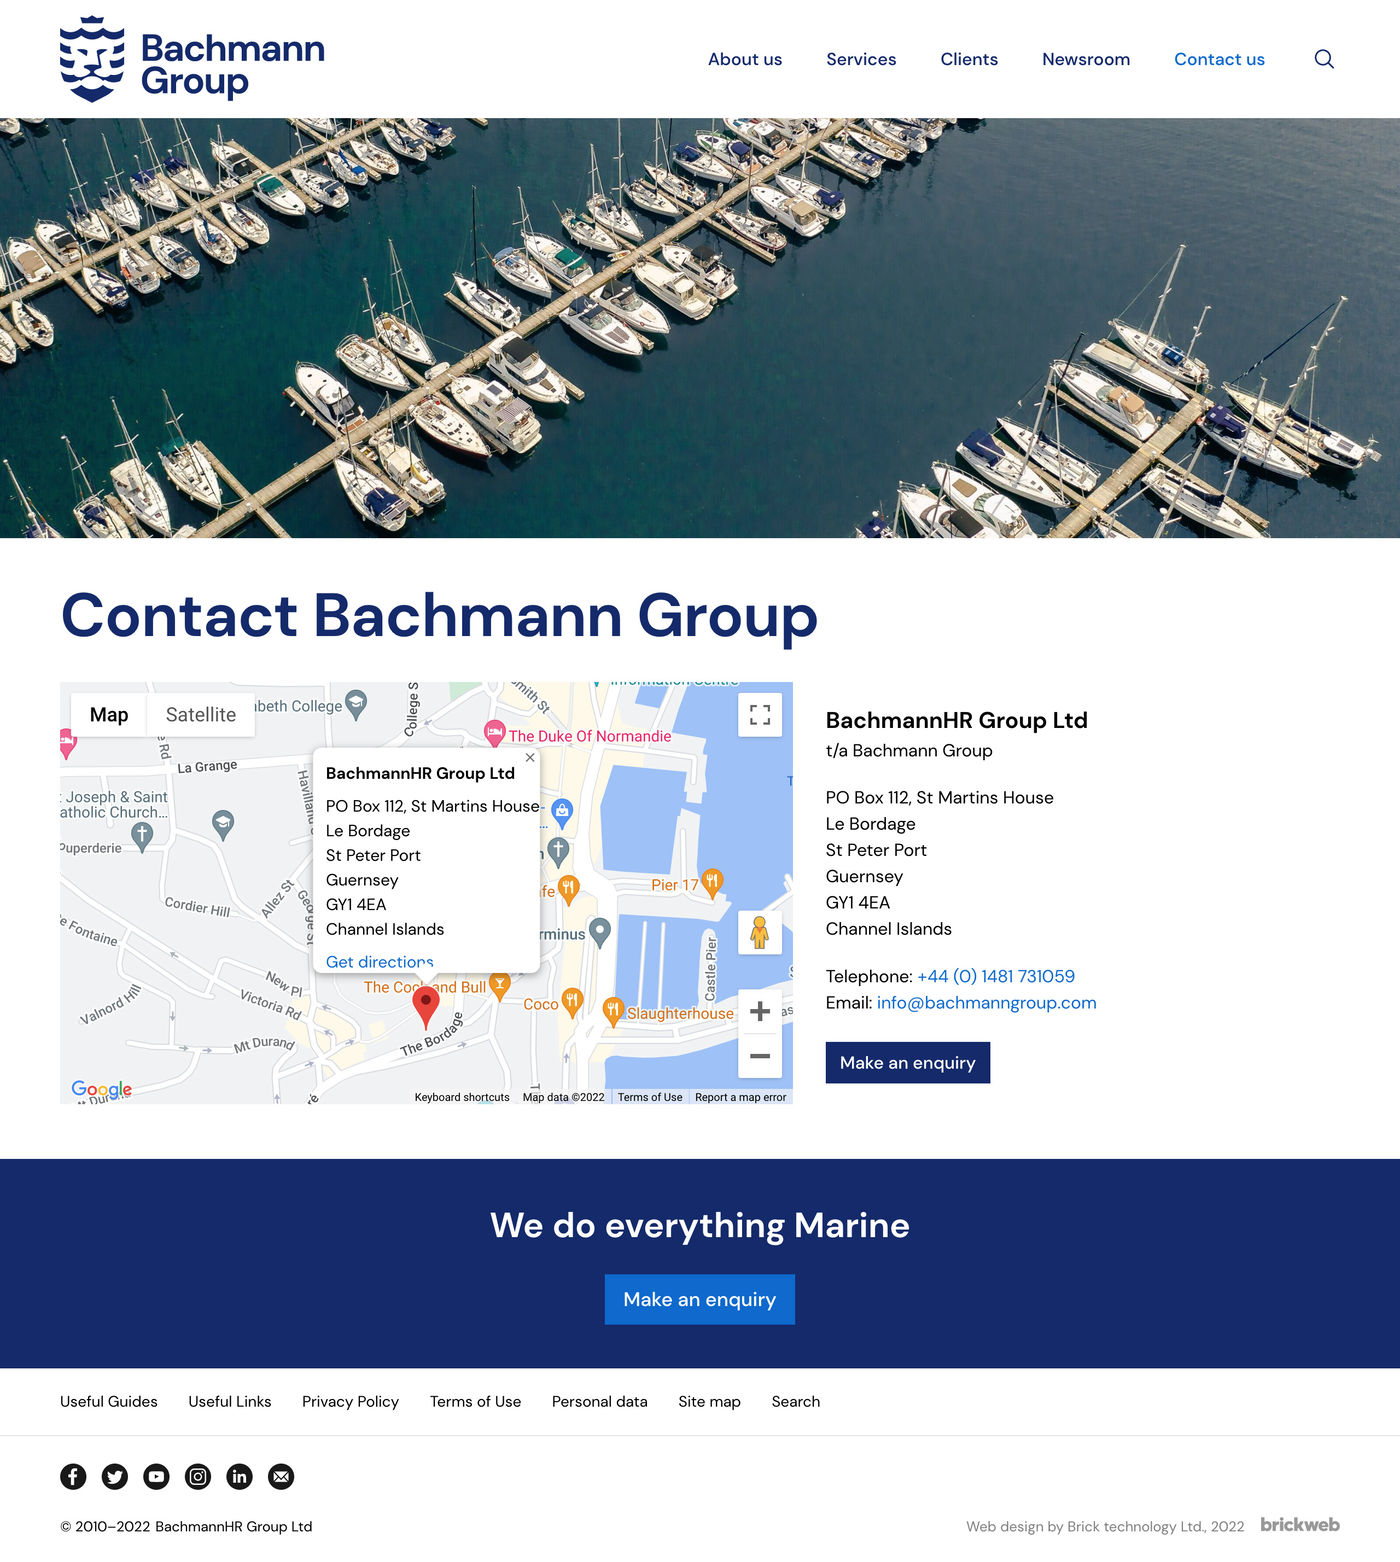 Bachmann Group Contact us